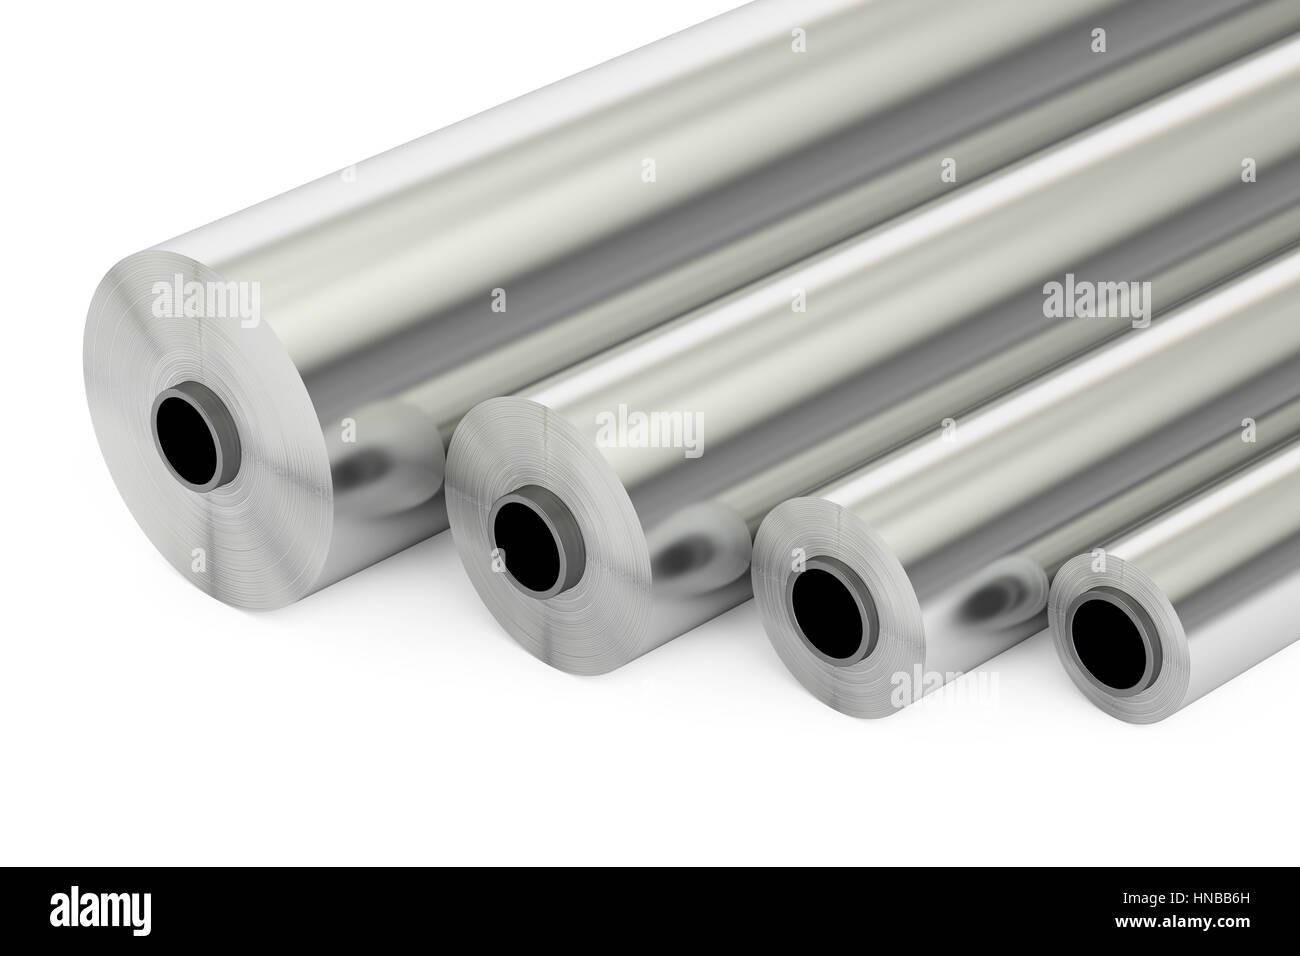 Aluminium Foil Images – Browse 43,136 Stock Photos, Vectors, and Video